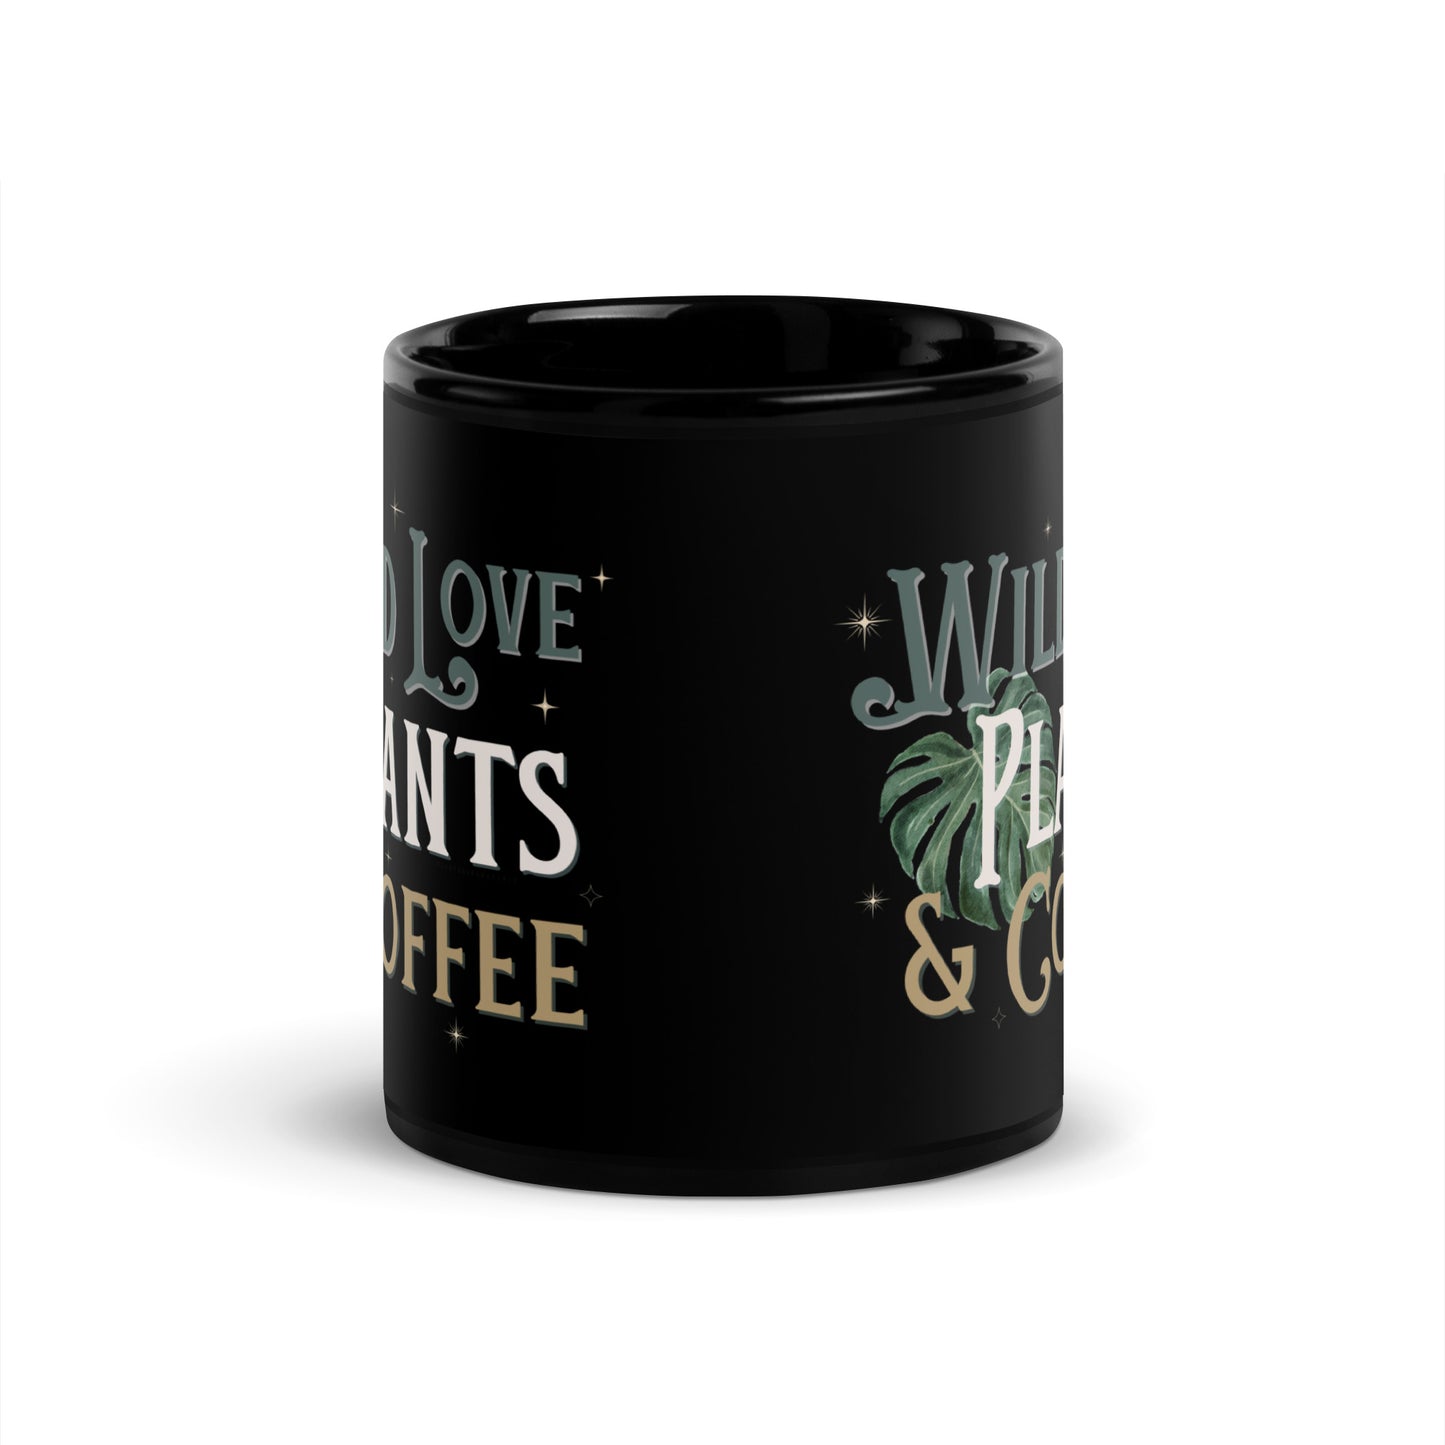 Wild Love, Plants & Coffee Black Printed Mug